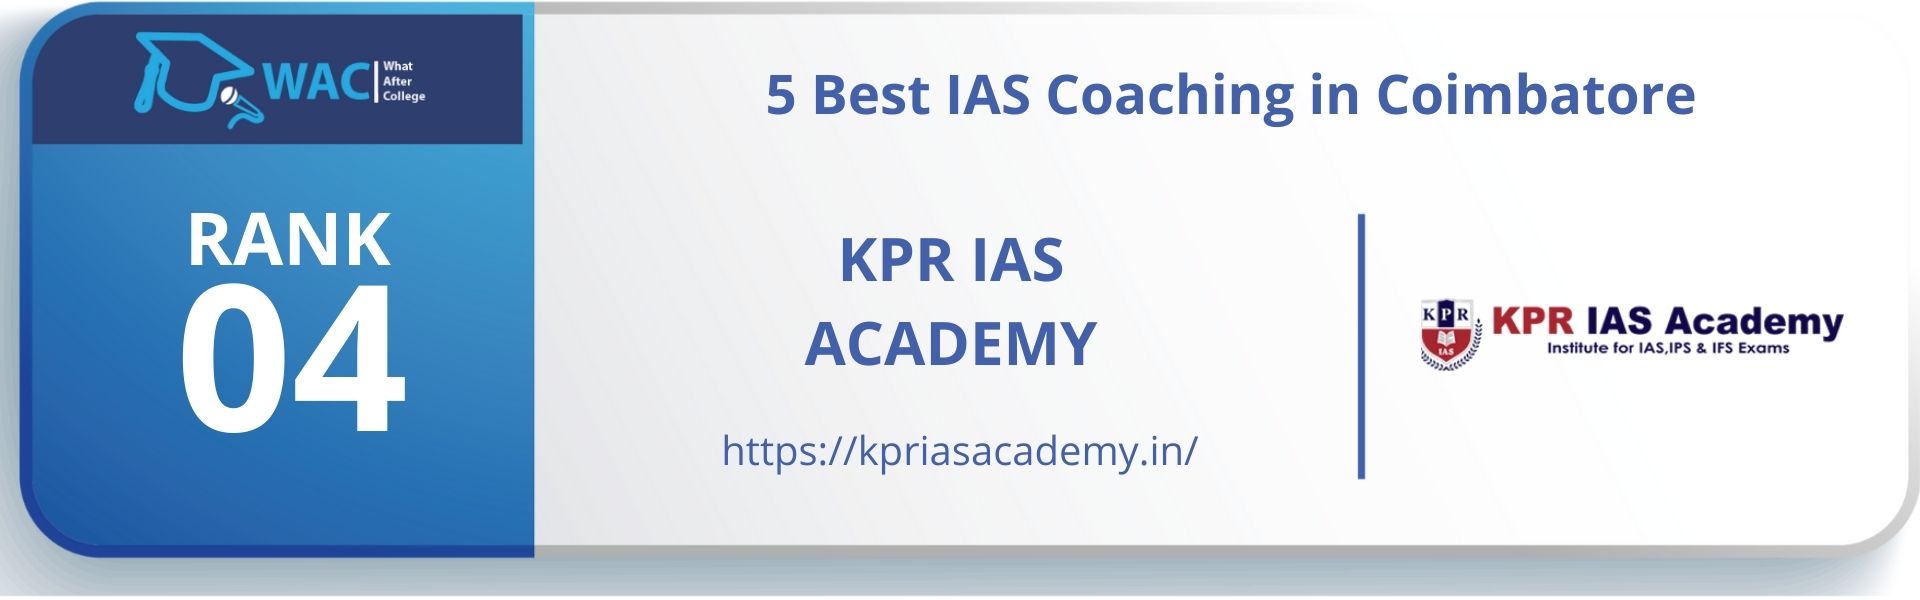 5 Best IAS Coaching in Coimbatore Rank 4: KPR IAS Academy in Coimbatore